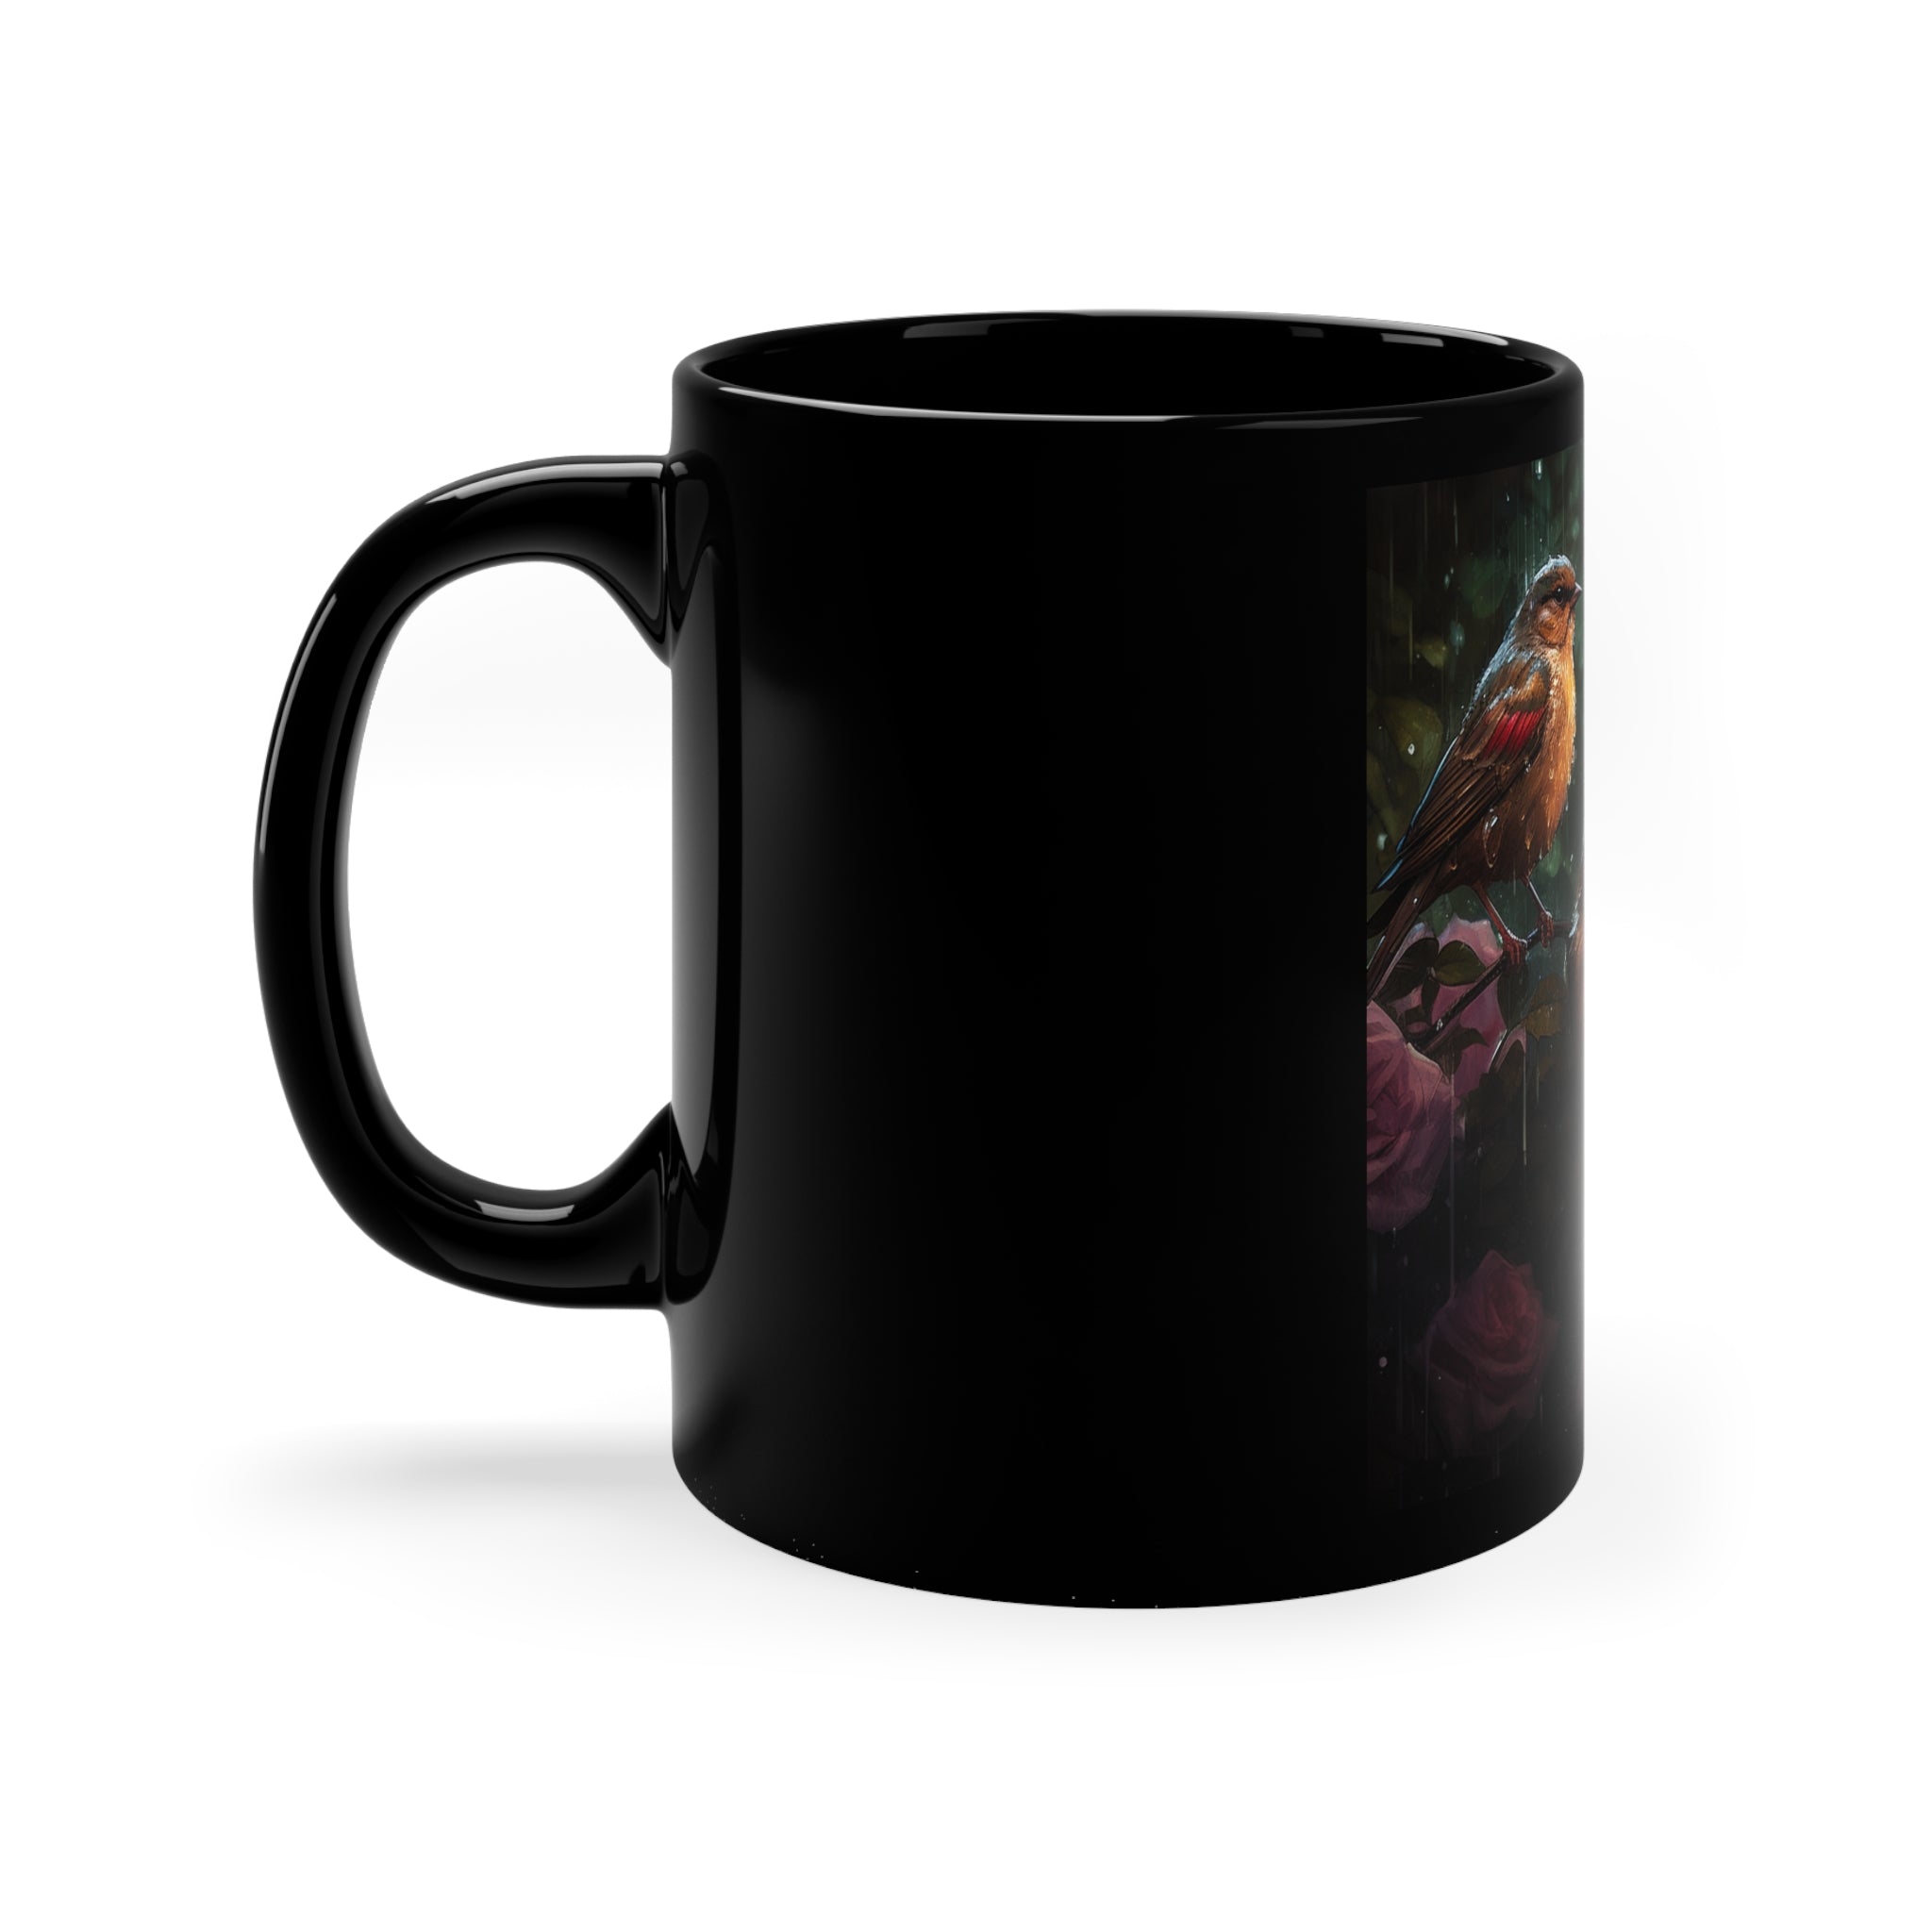 11oz Black Mug Sparrows Birds in Rose Flower Bush Ceramic "Cawfee" Floral Cup Gift Black Mug Coffee Cup Gift